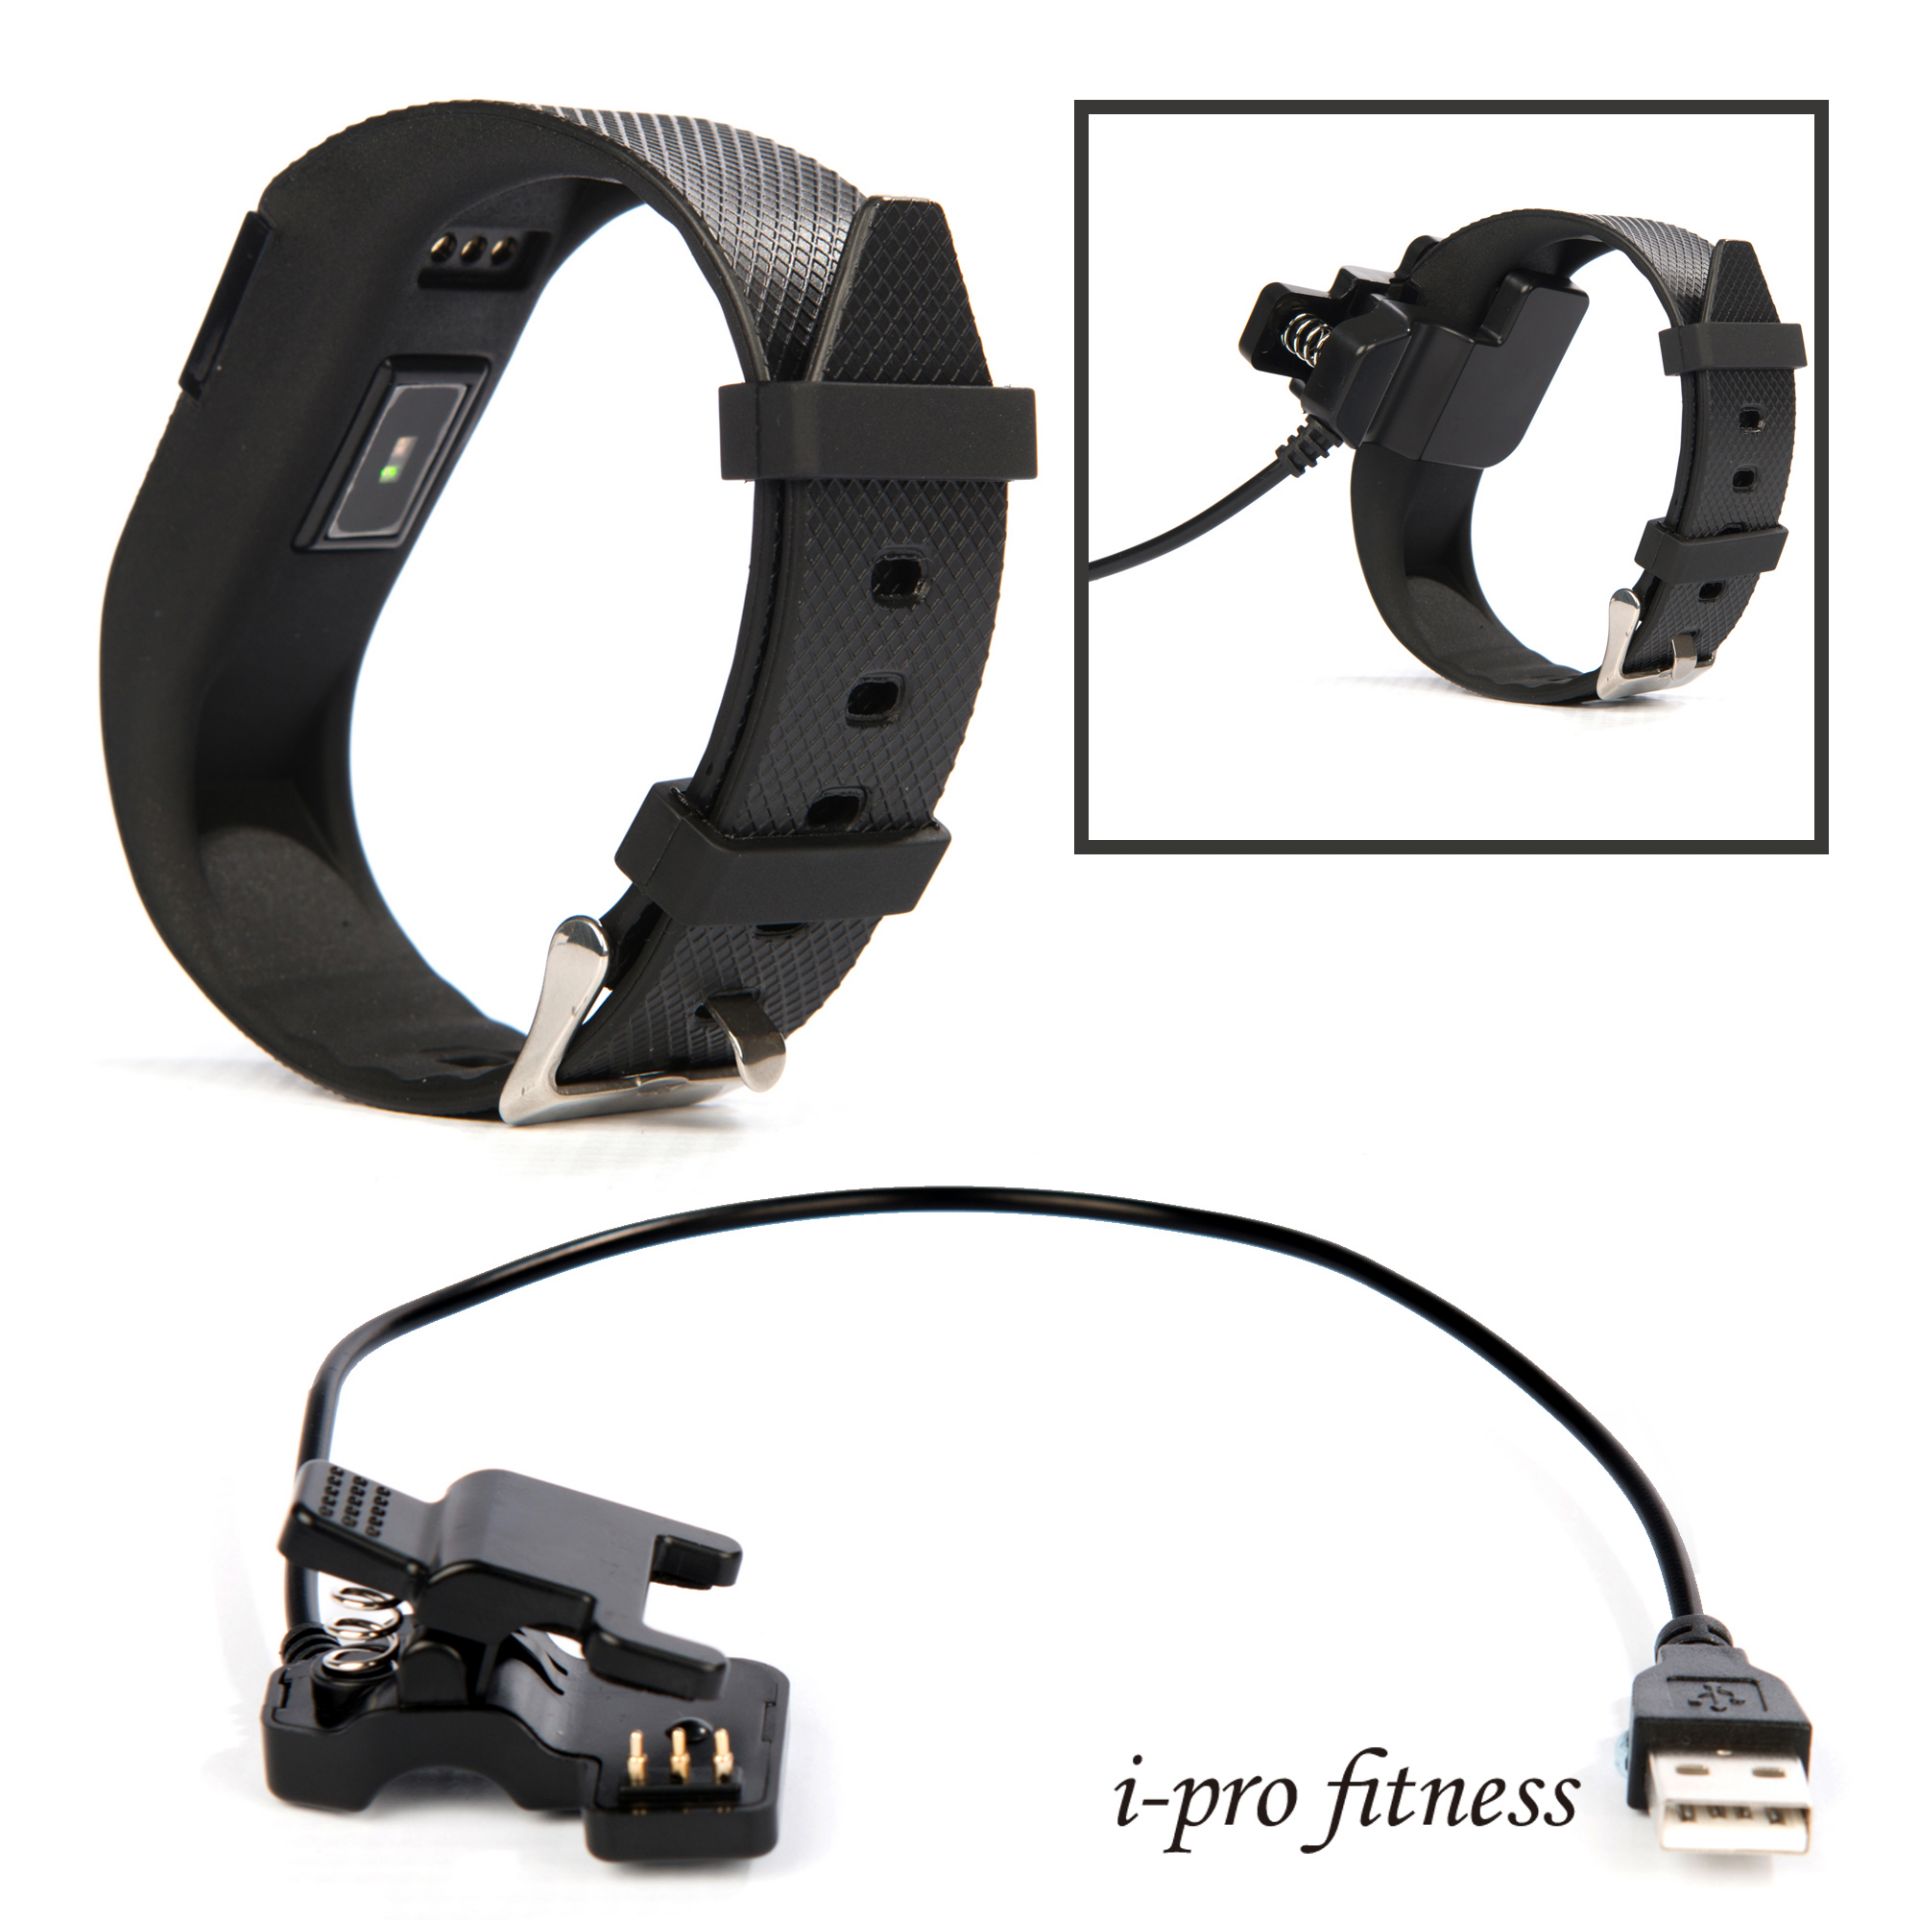 Trade lot 50 x Units Fitness Tracker i-pro fitness, Bluetooth 4.0 Sports Smart Bracelet*** Fitness - Image 7 of 8